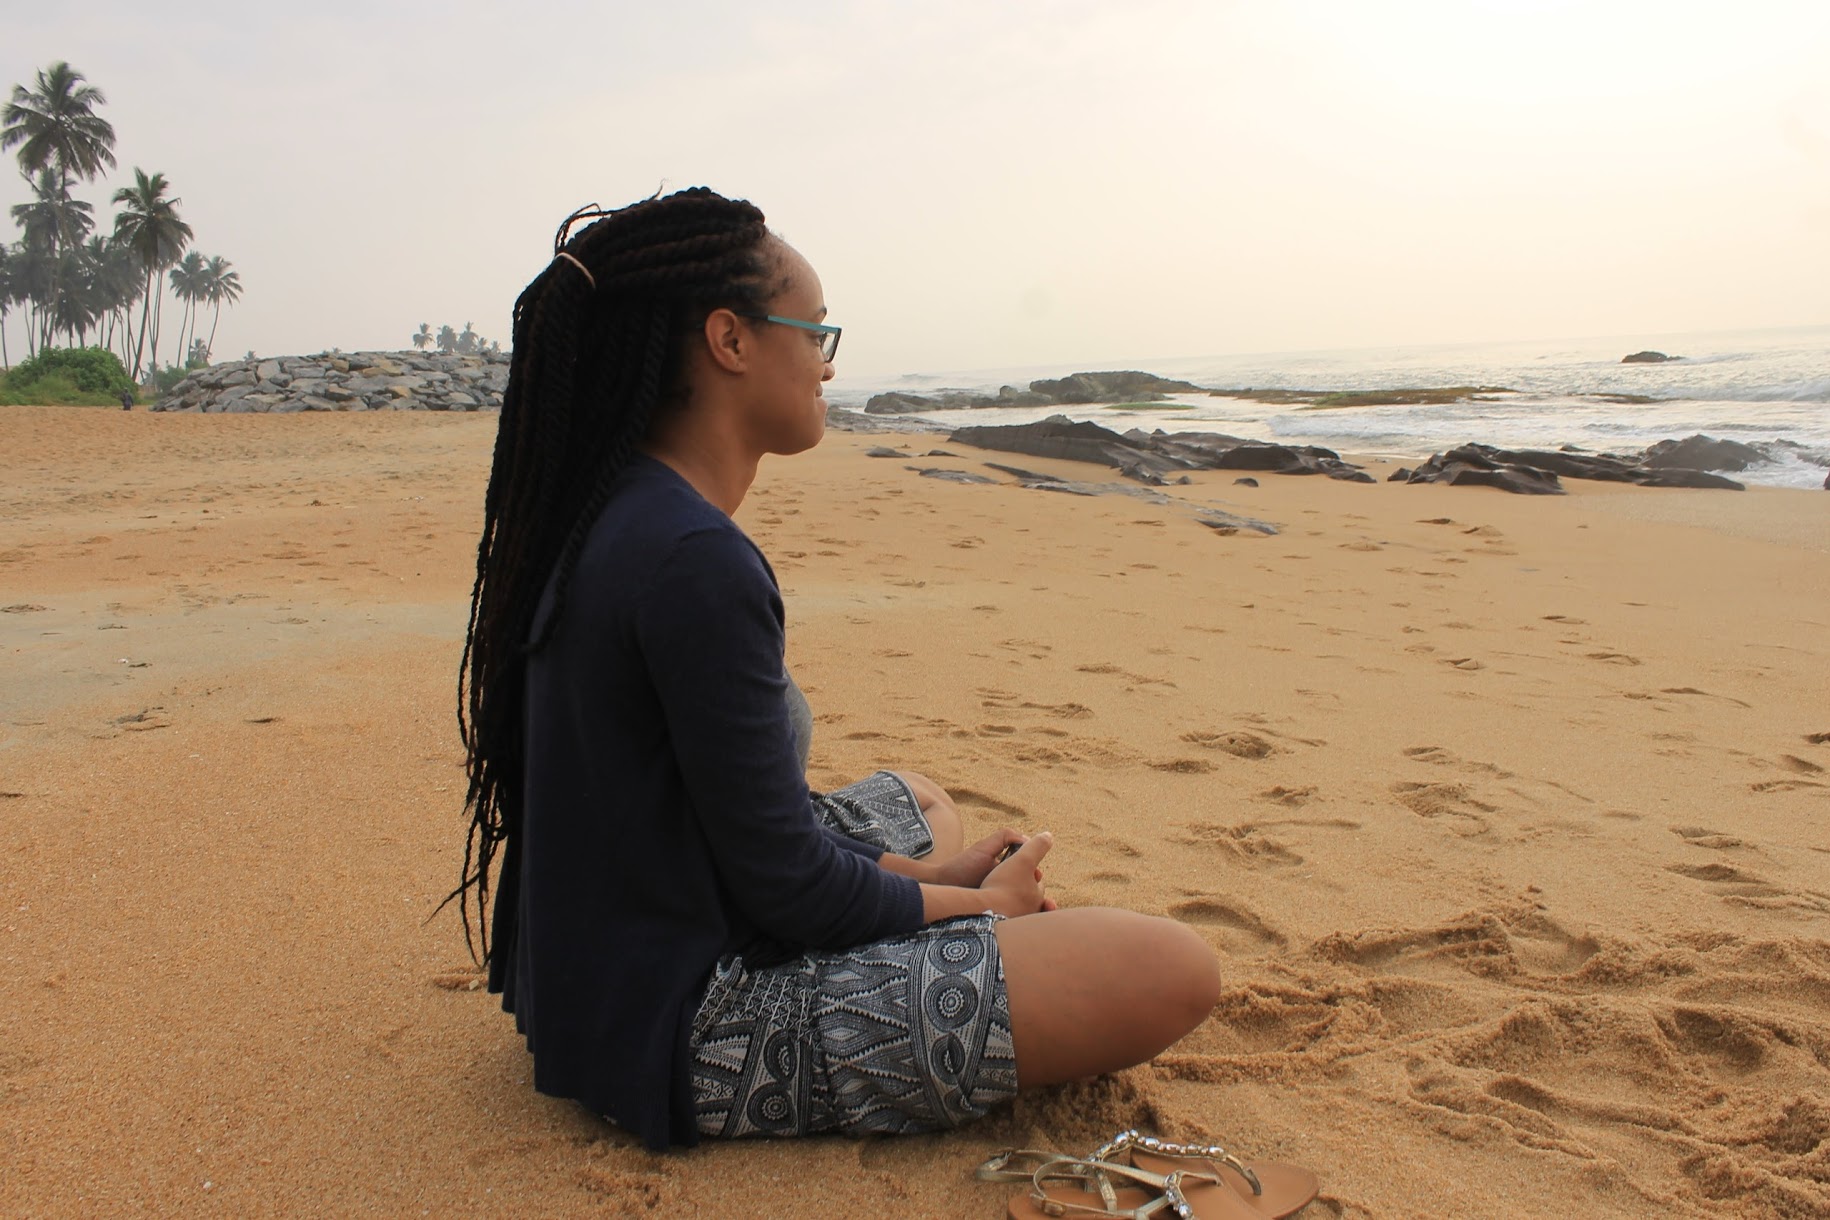 Joakina Stone, HEGC! 2018 participant, on the beach in Cape Coast, Ghana